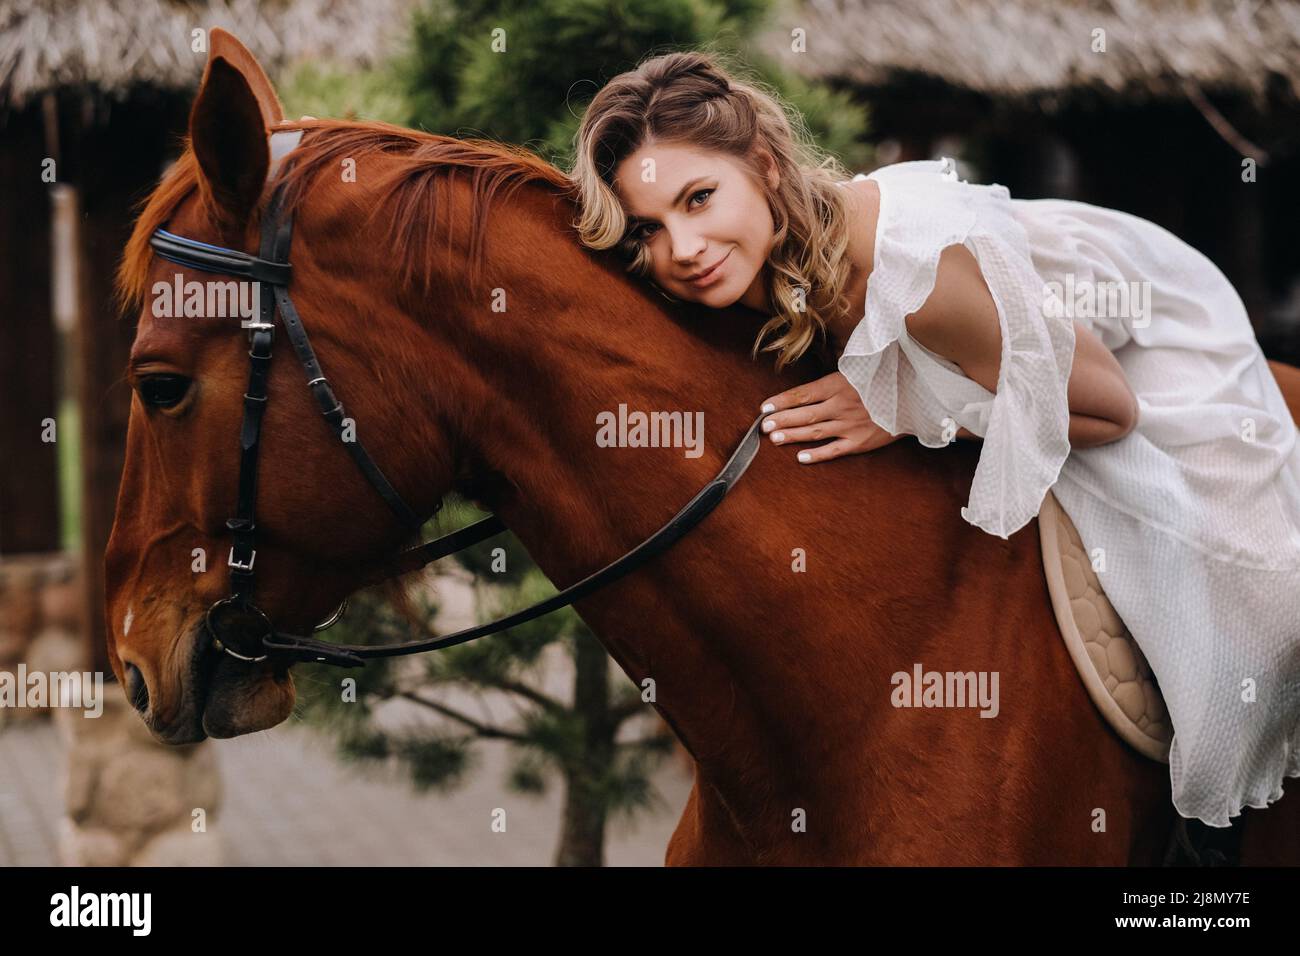 A woman in a white sundress riding a horse near a farm Stock Photo